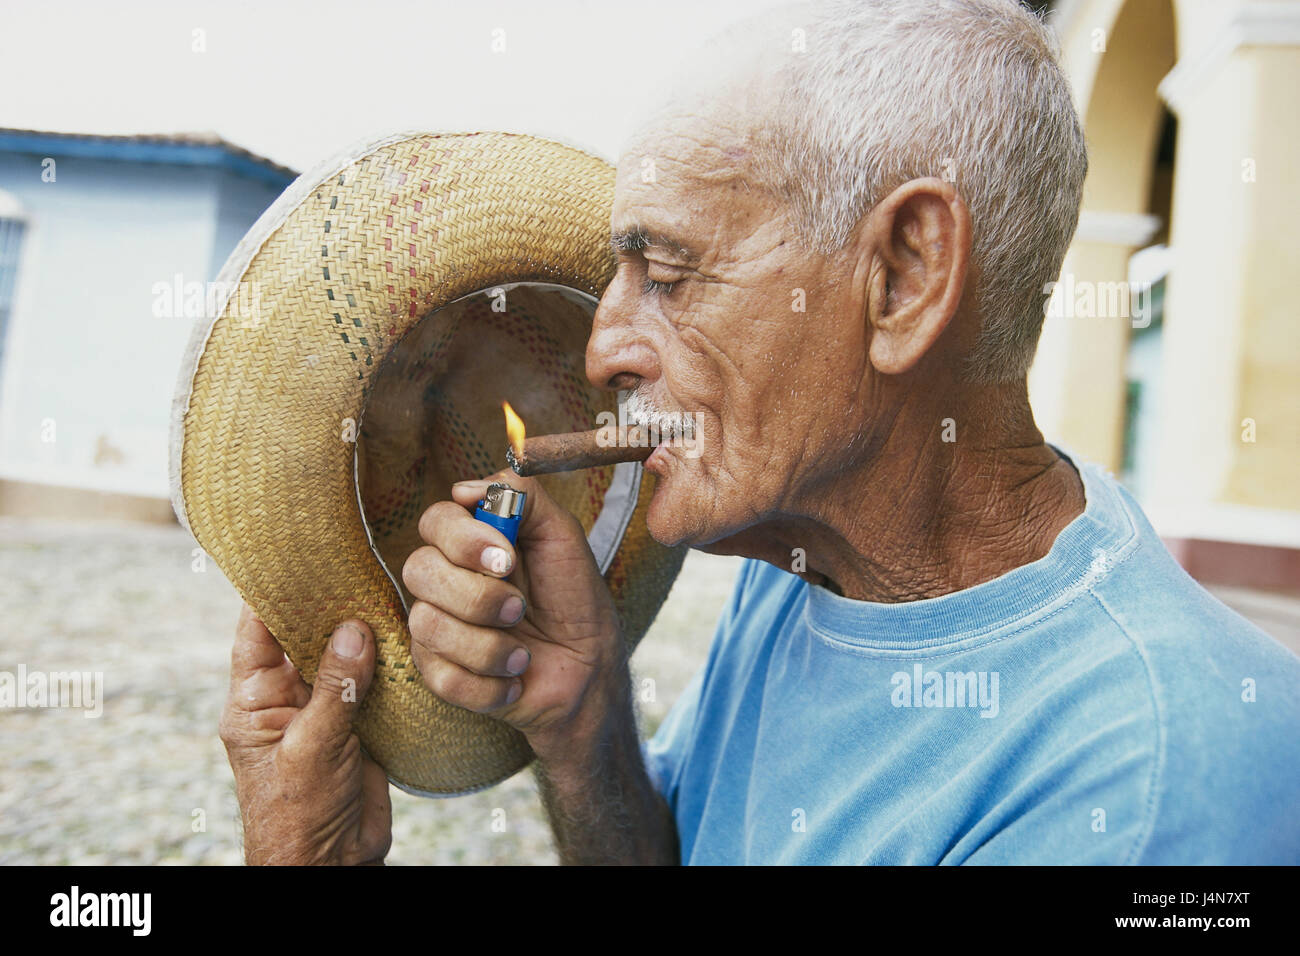 https://c8.alamy.com/comp/J4N7XT/cuba-trinidad-boss-straw-hat-cigar-light-page-portrait-no-model-release-J4N7XT.jpg